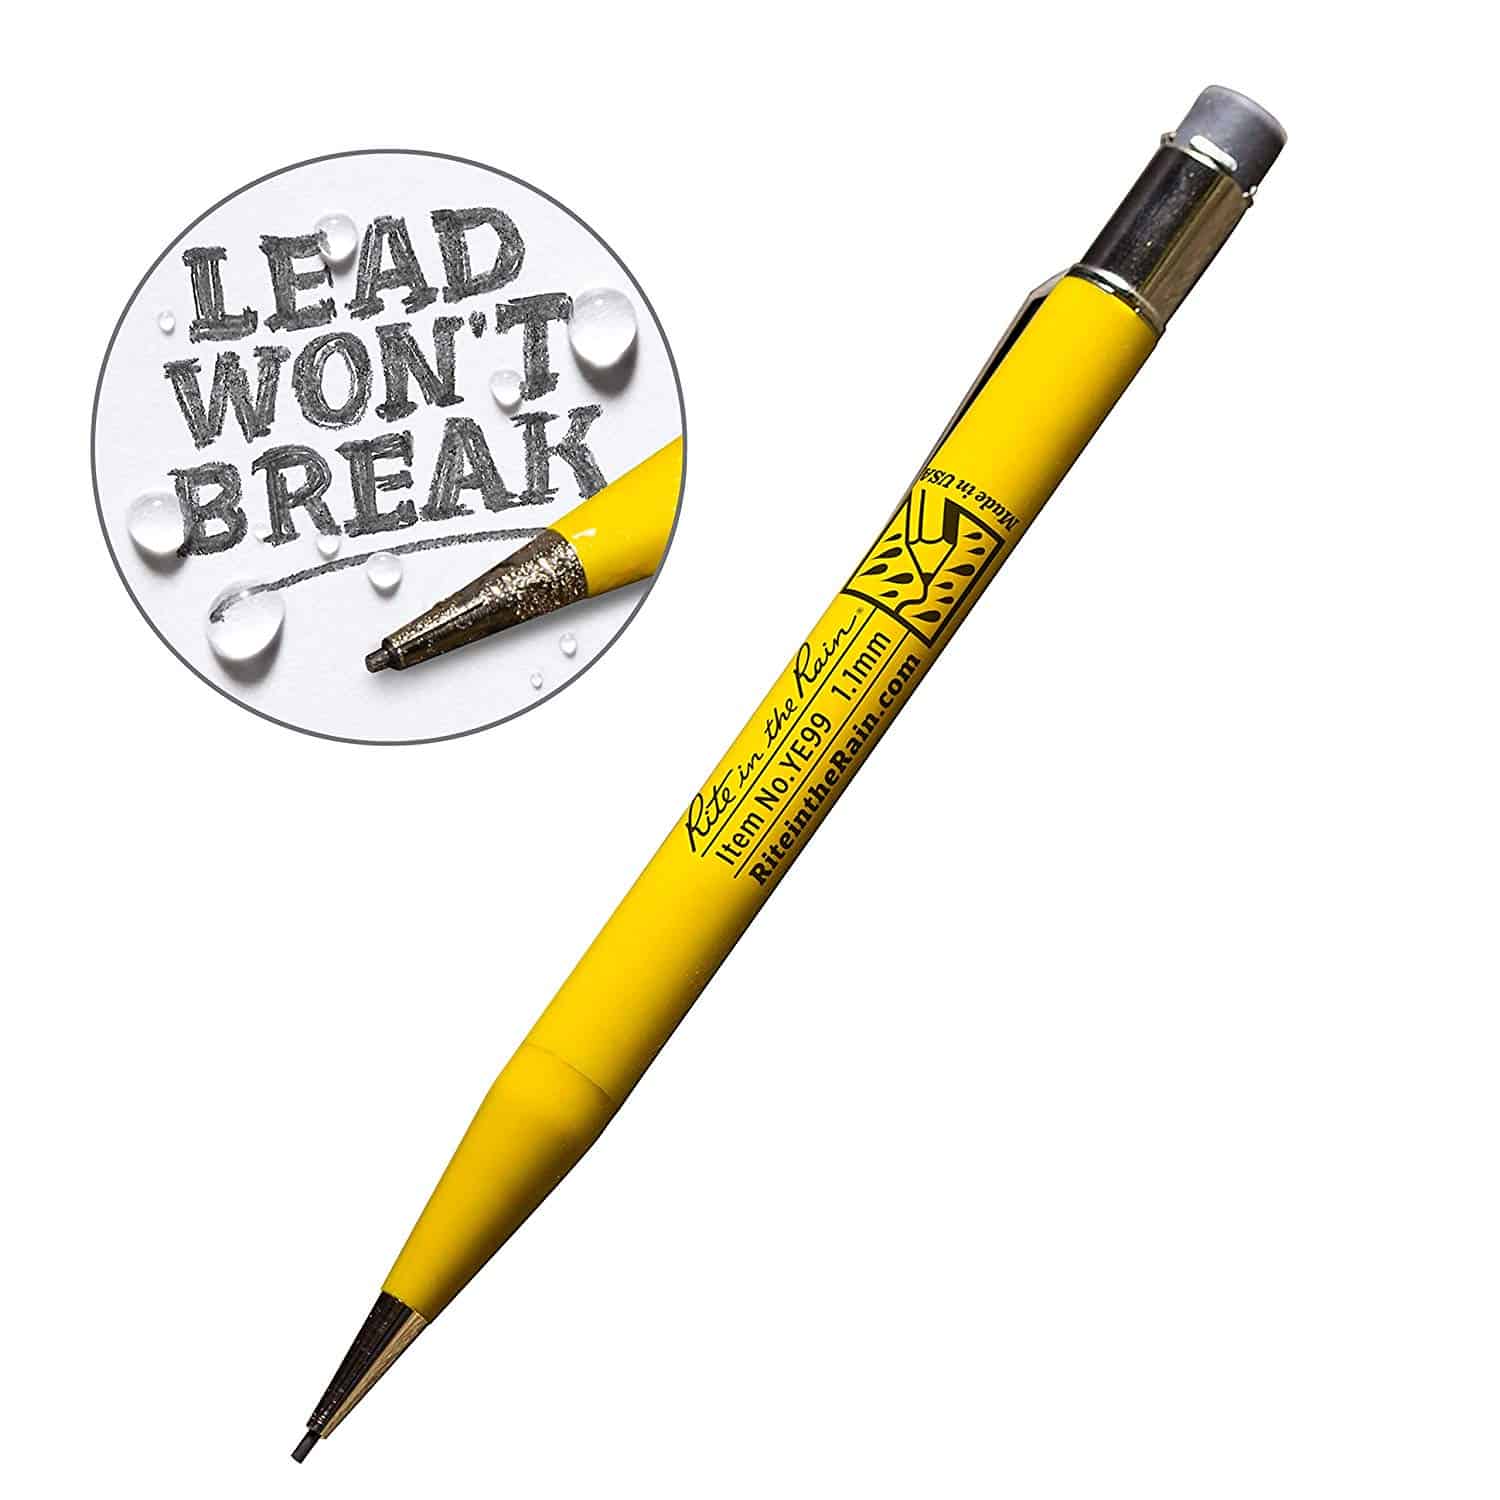 1mm pencil lead